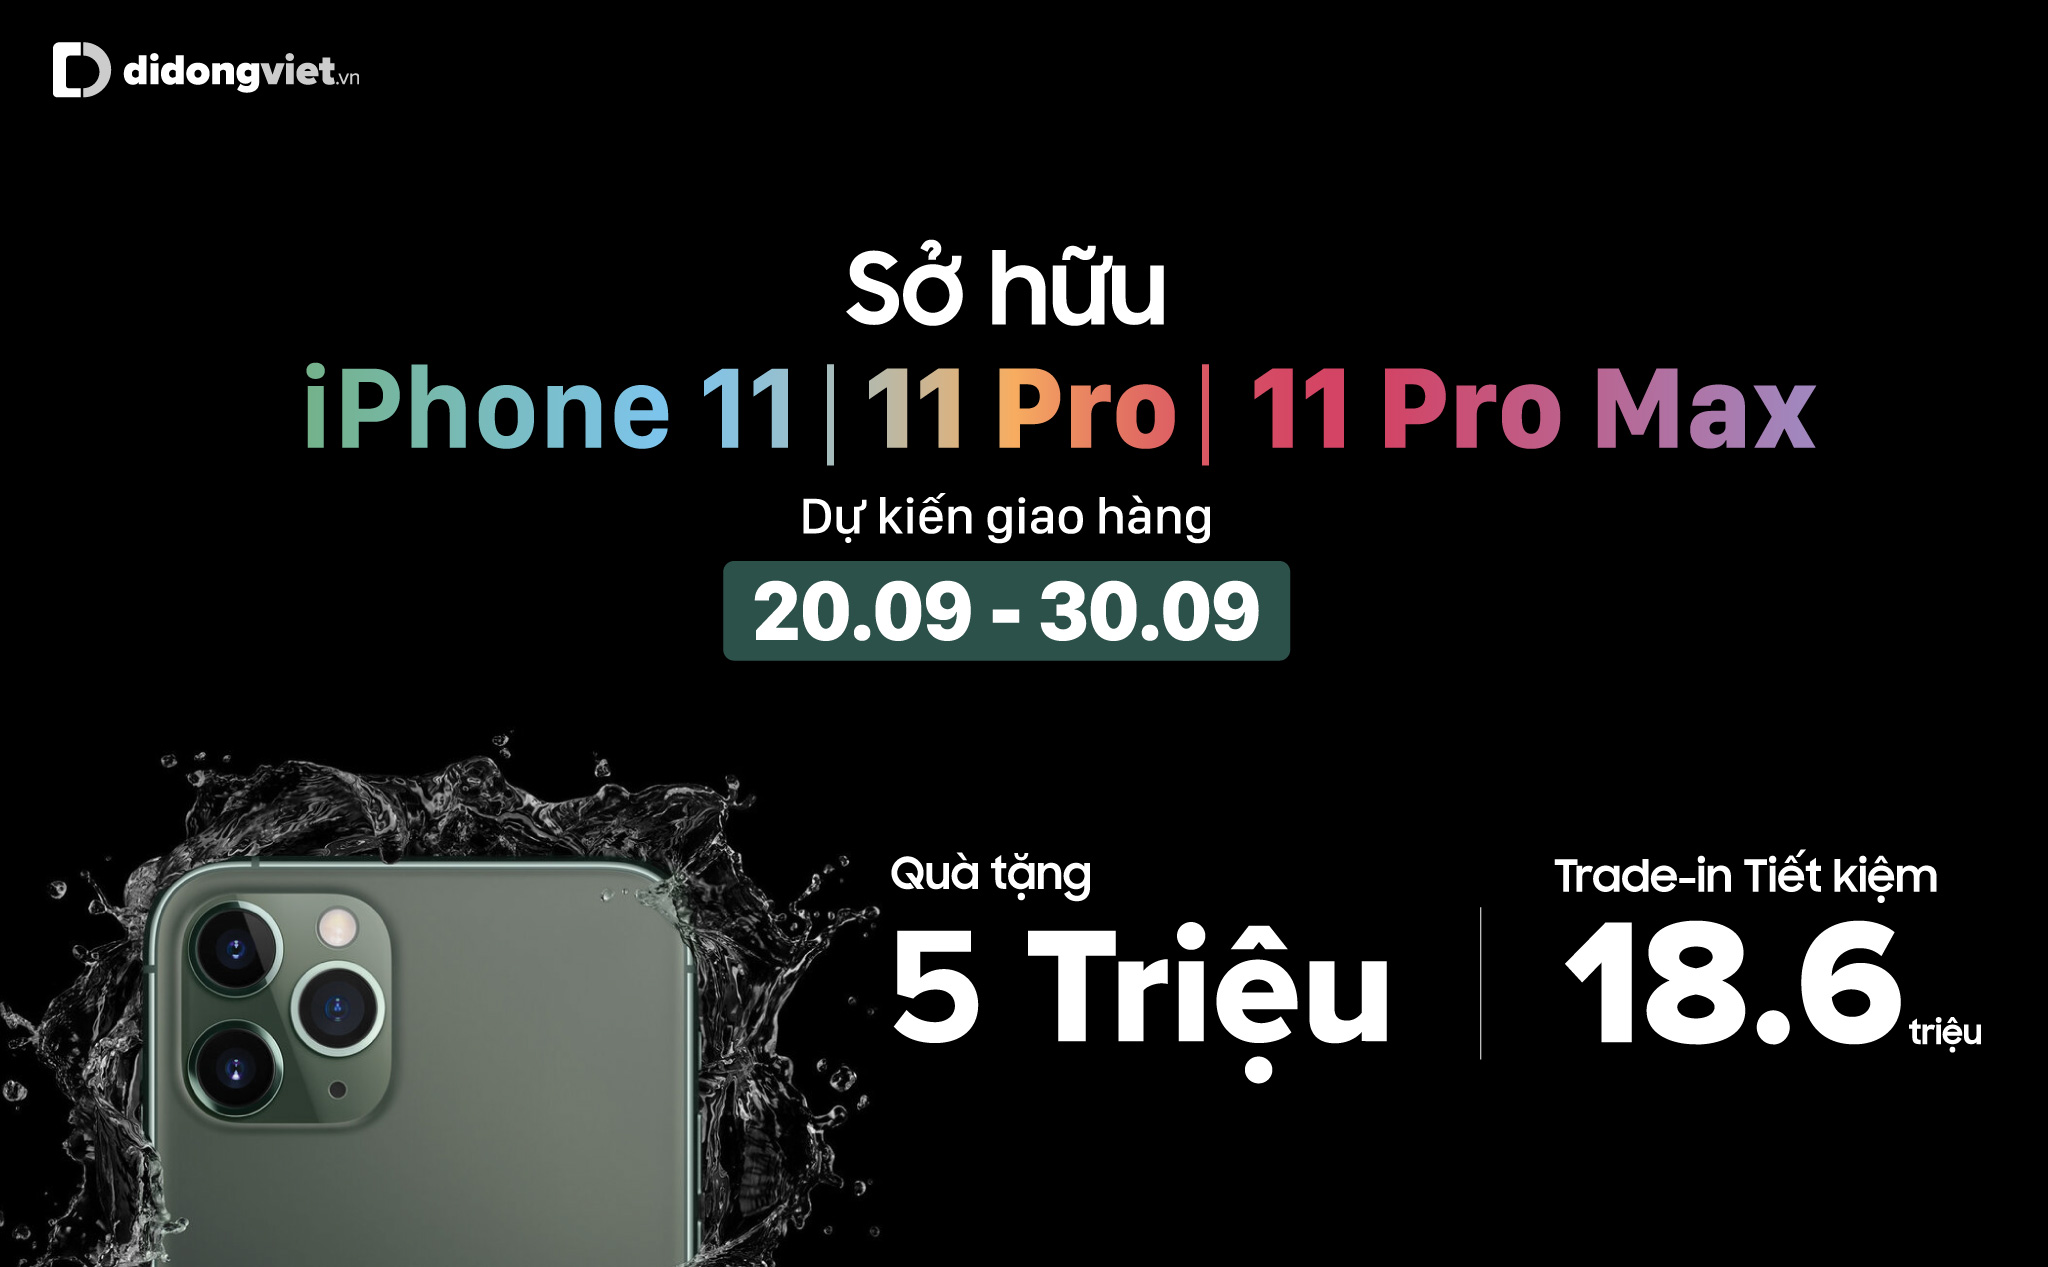 tradein-apple-iphone-11-11pro-11pro-max-didongviet.jpg